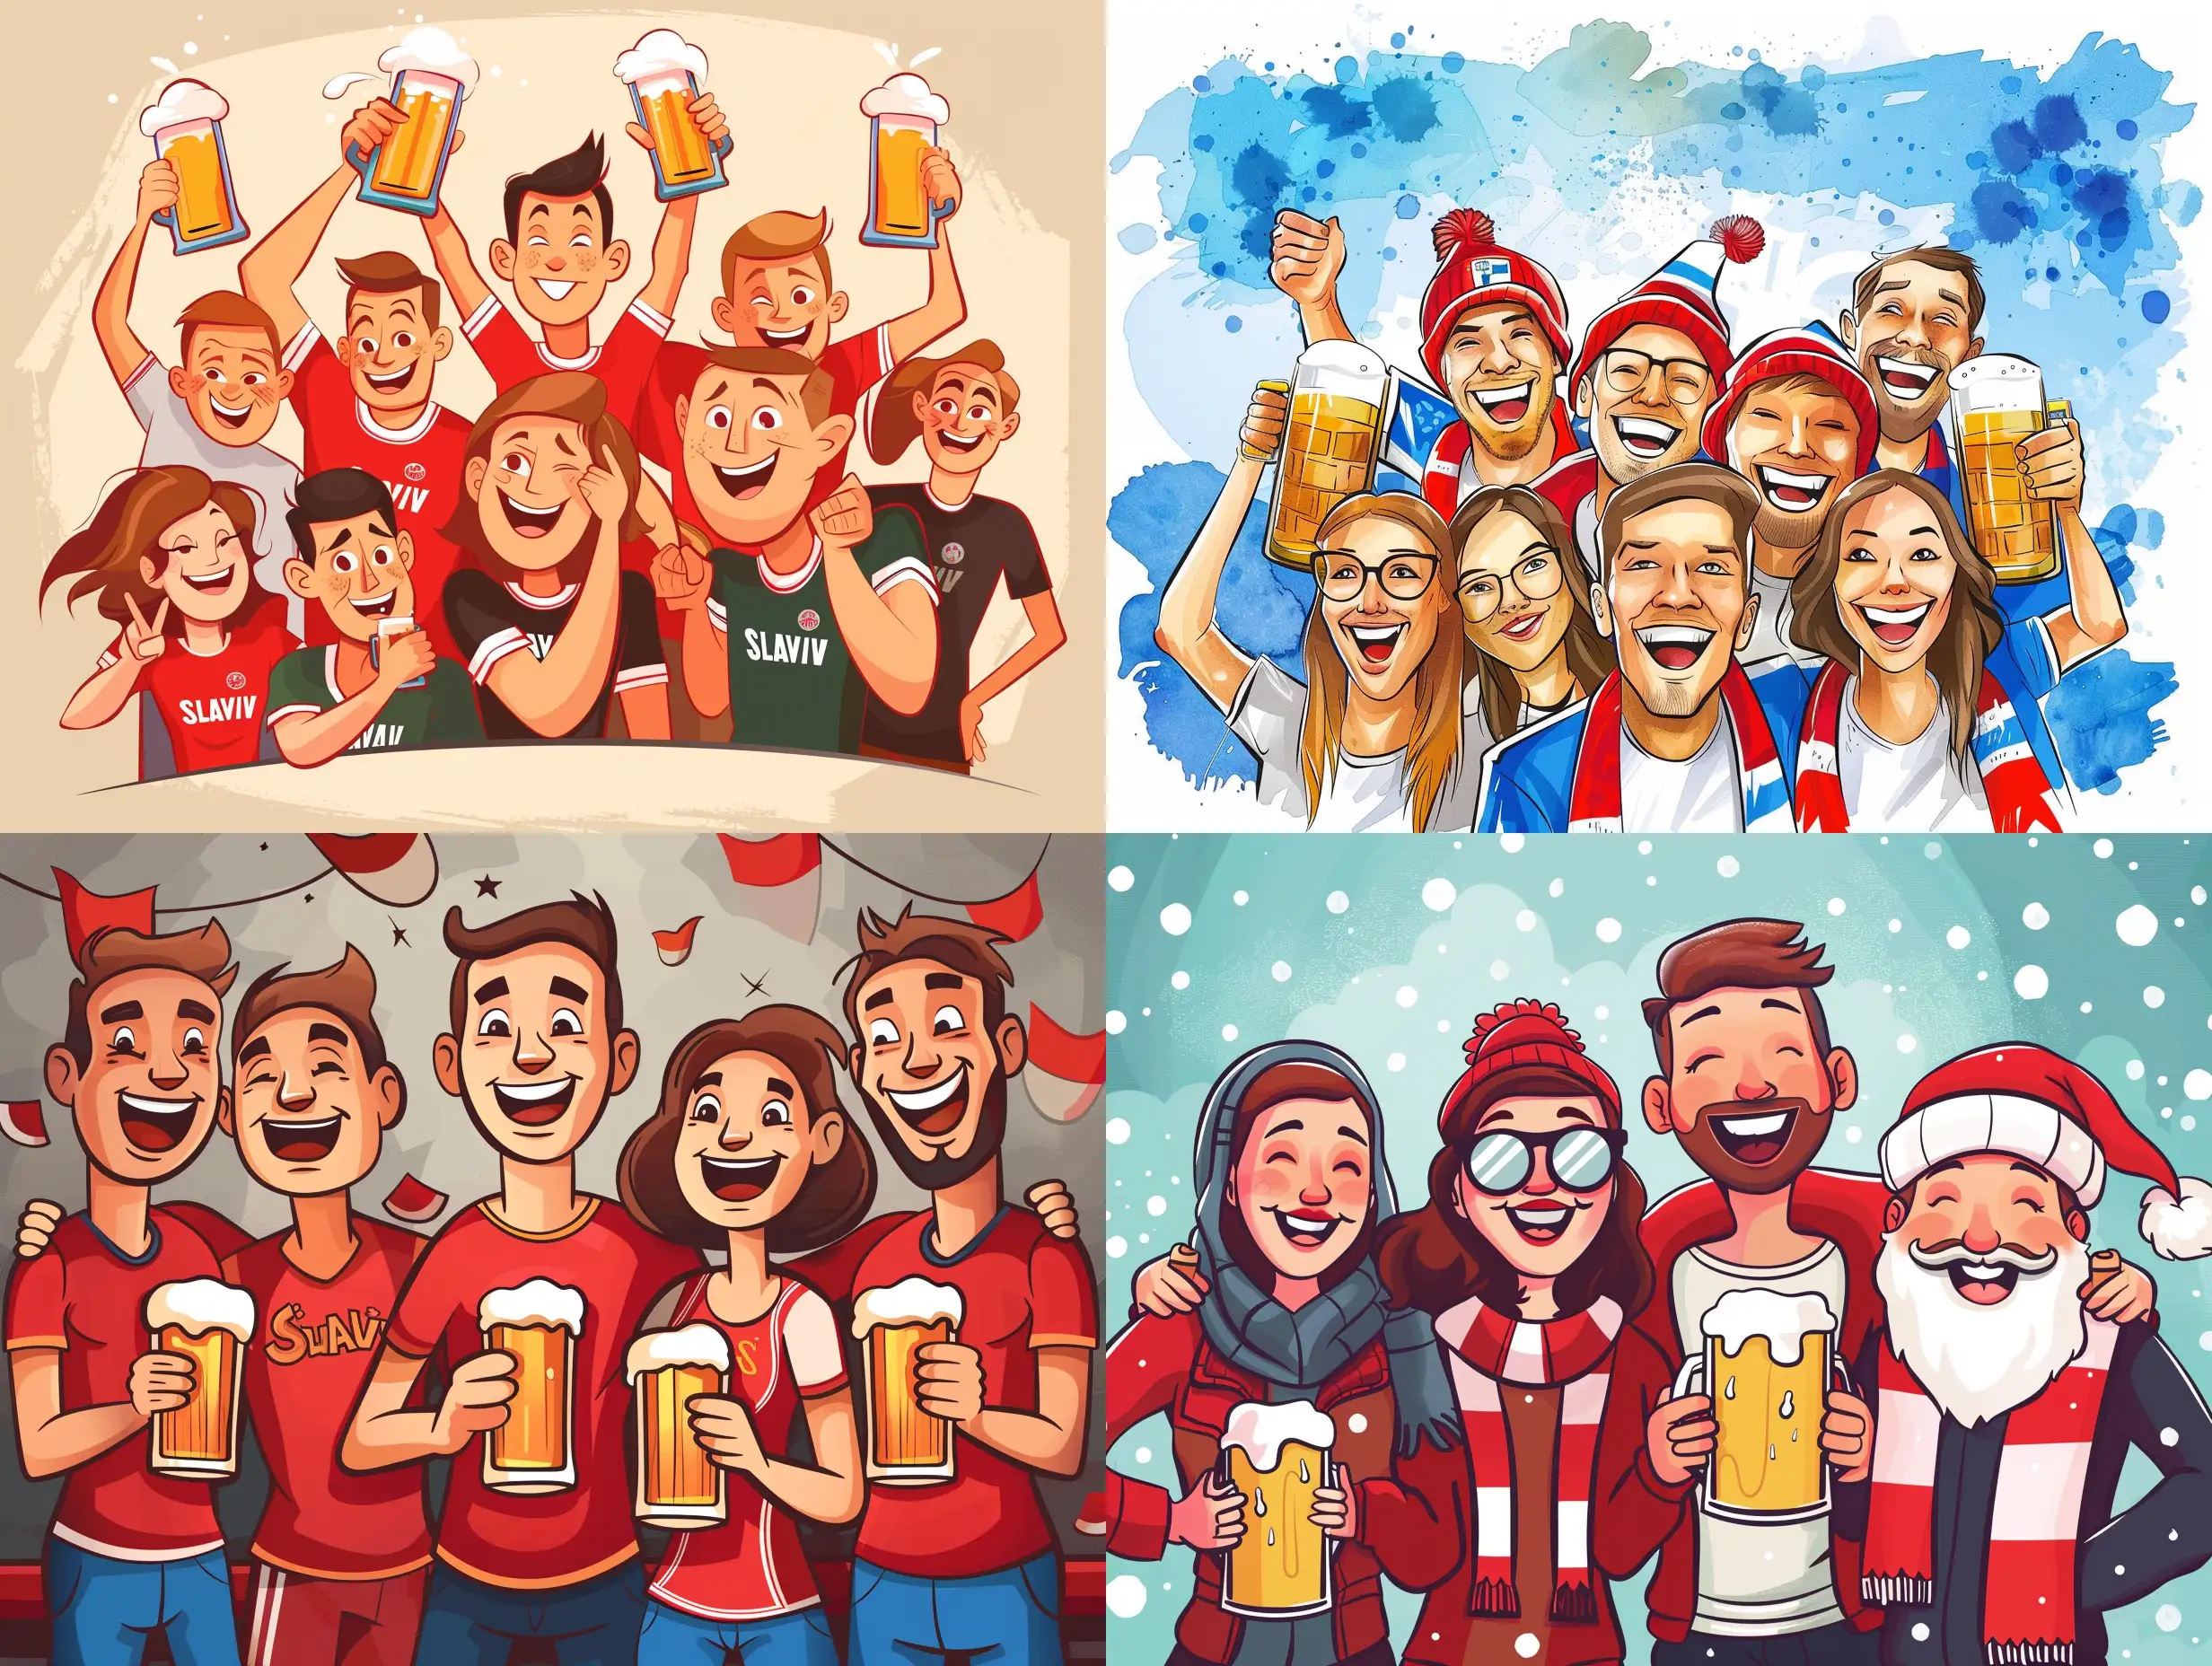 Cartoon of fans of football club Slavia Prague with beer